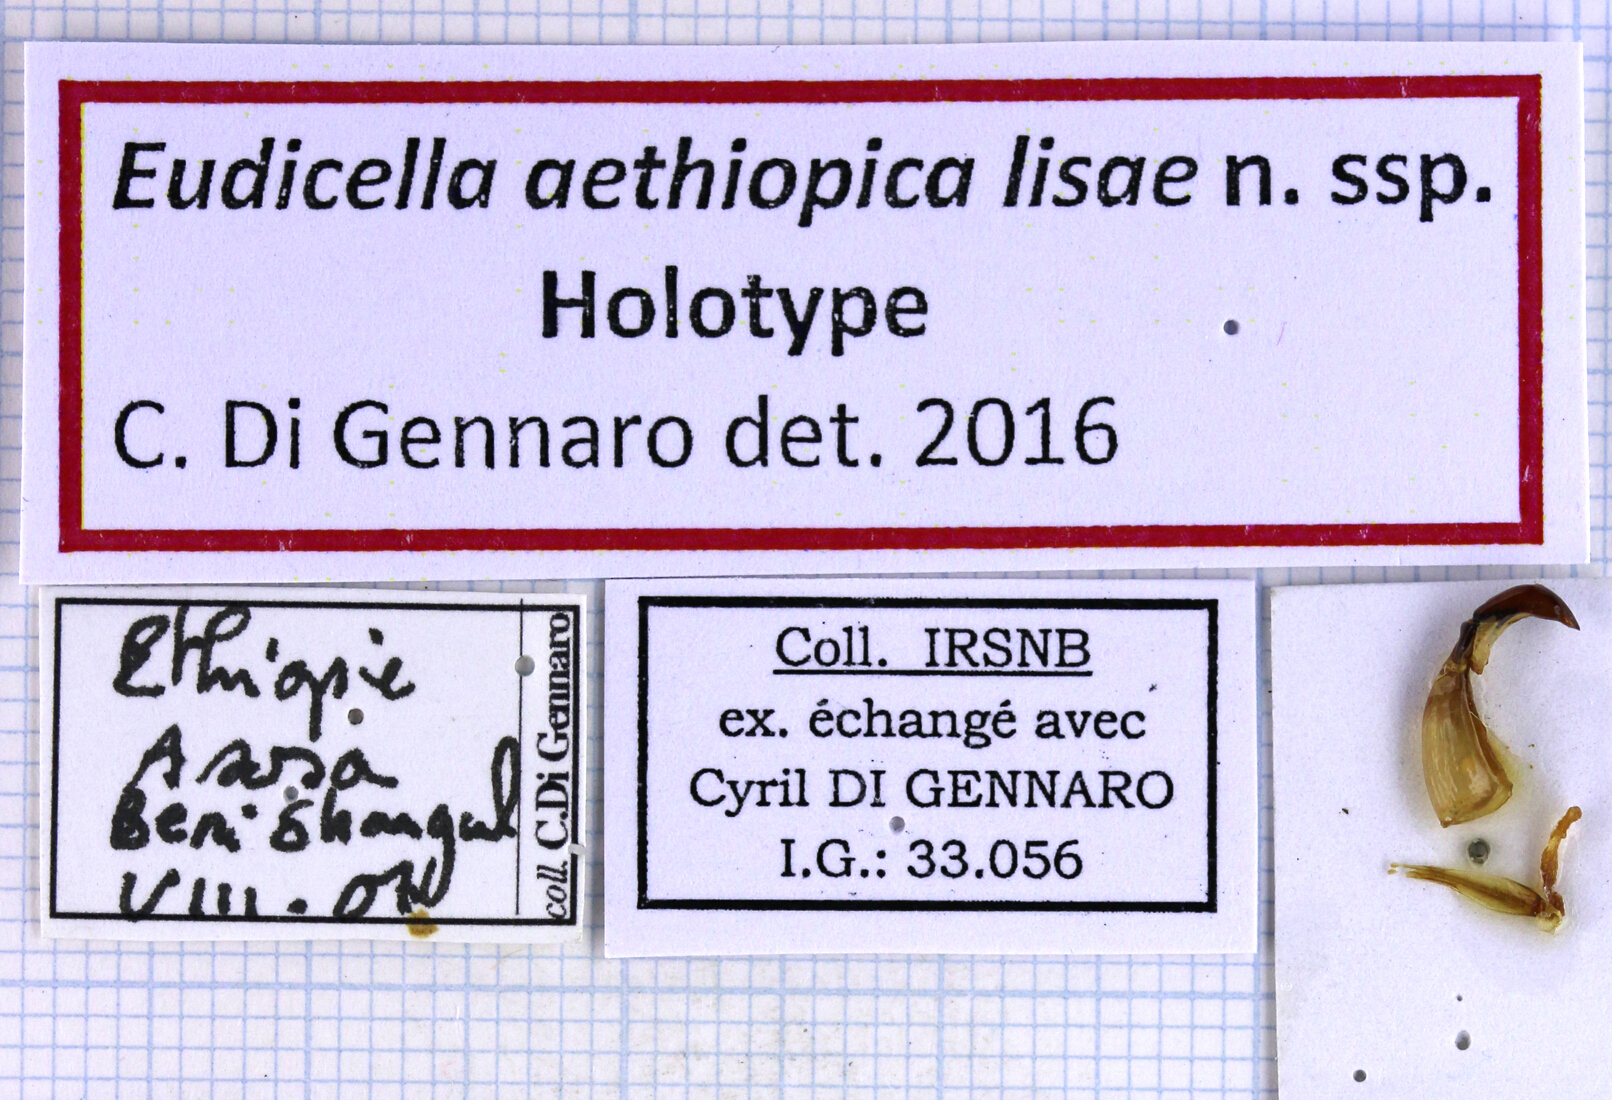 Eudicella aethiopica lisae label 49932.jpg